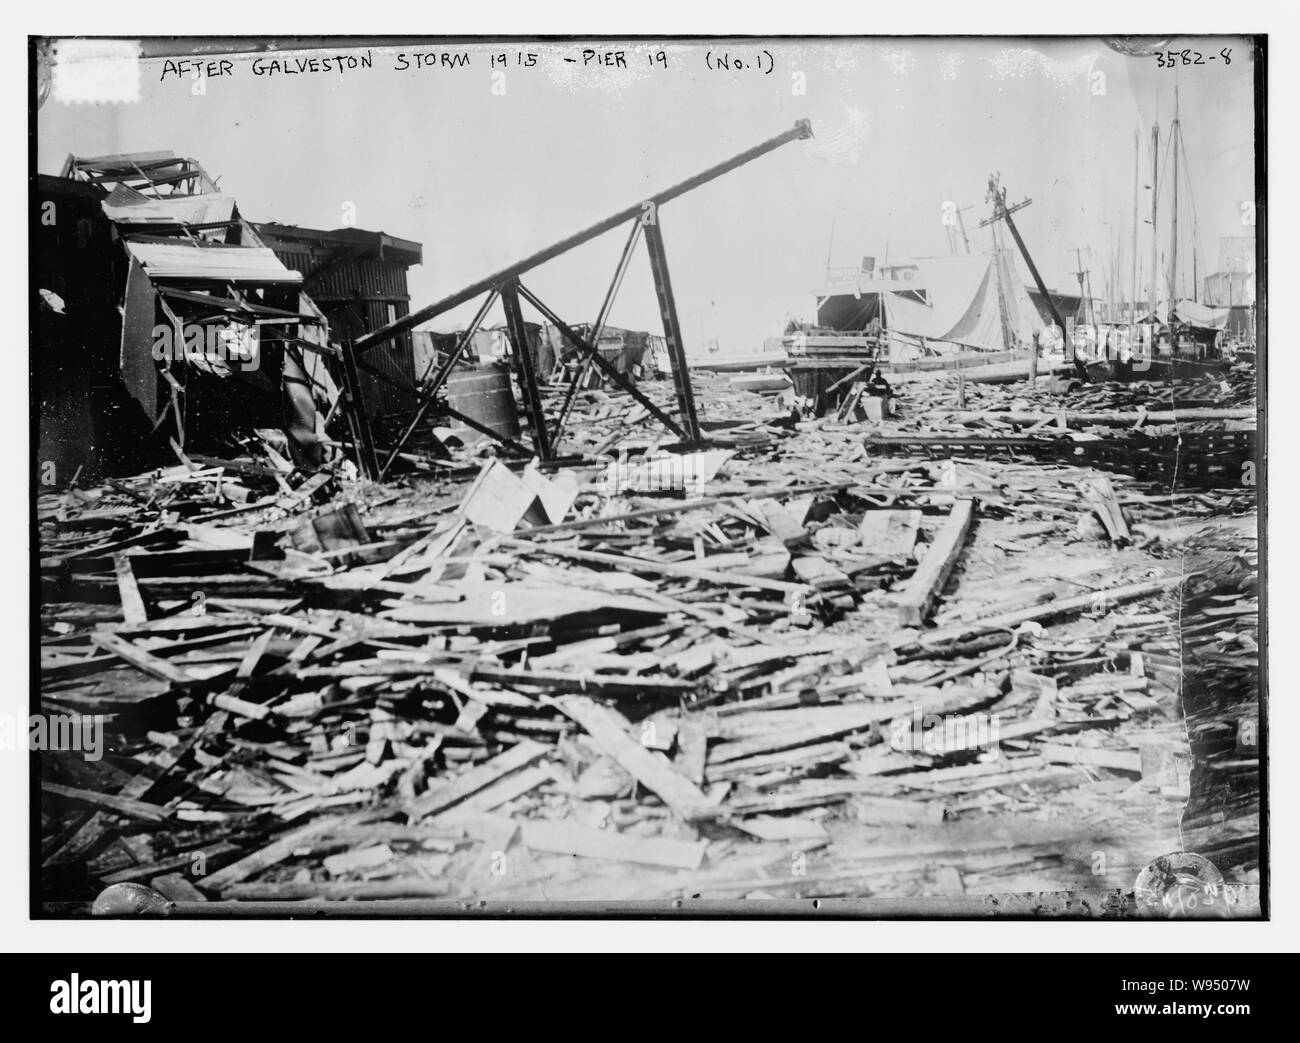 After Galveston Storm, 1915 -- Pier 19 (No. 1) Stock Photo